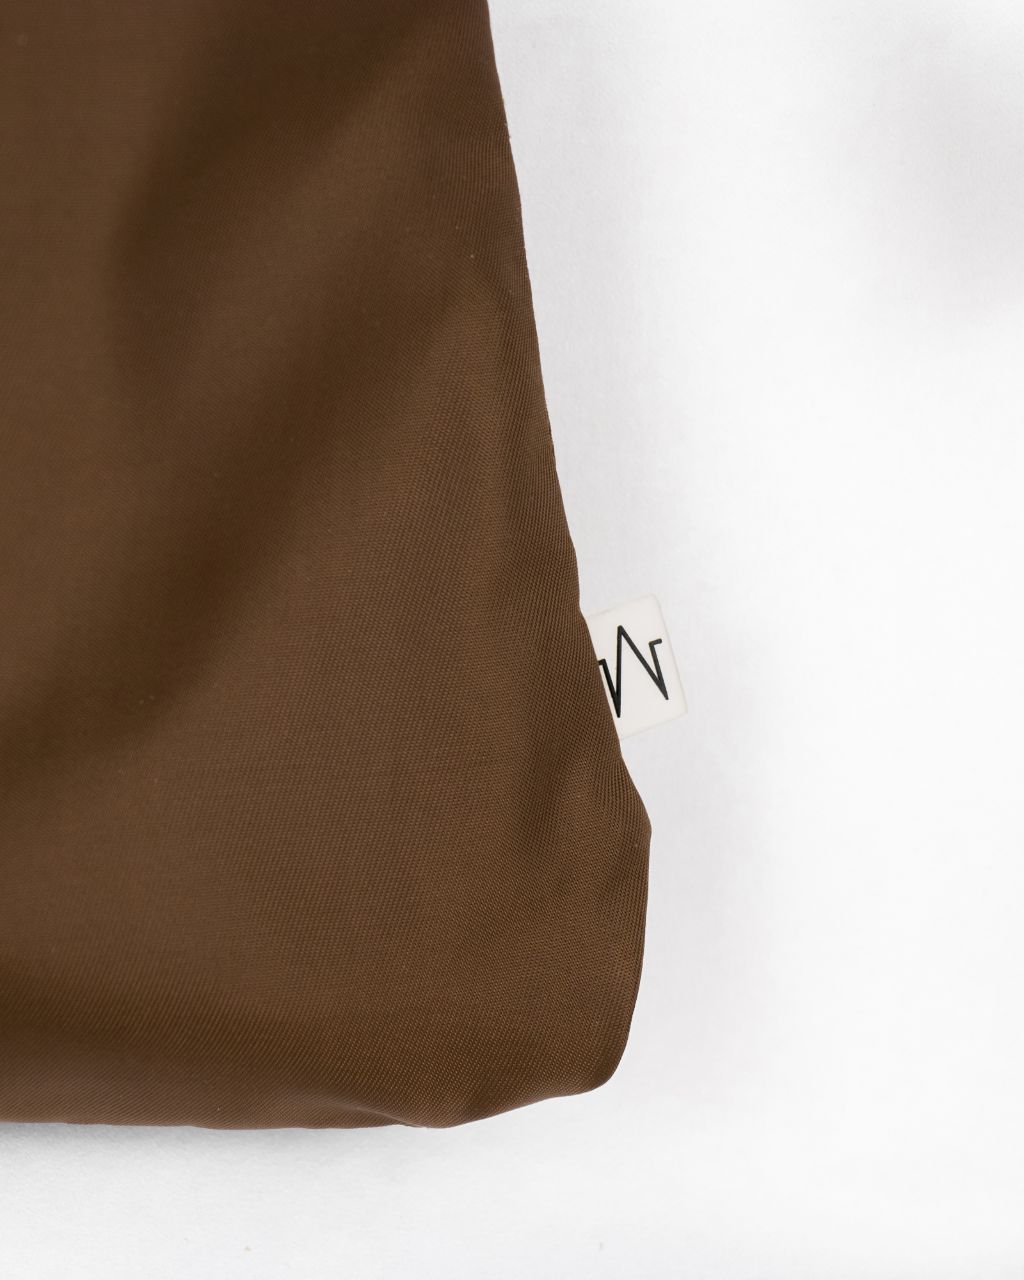 unisex work pocket in brown nylon logo tag close up